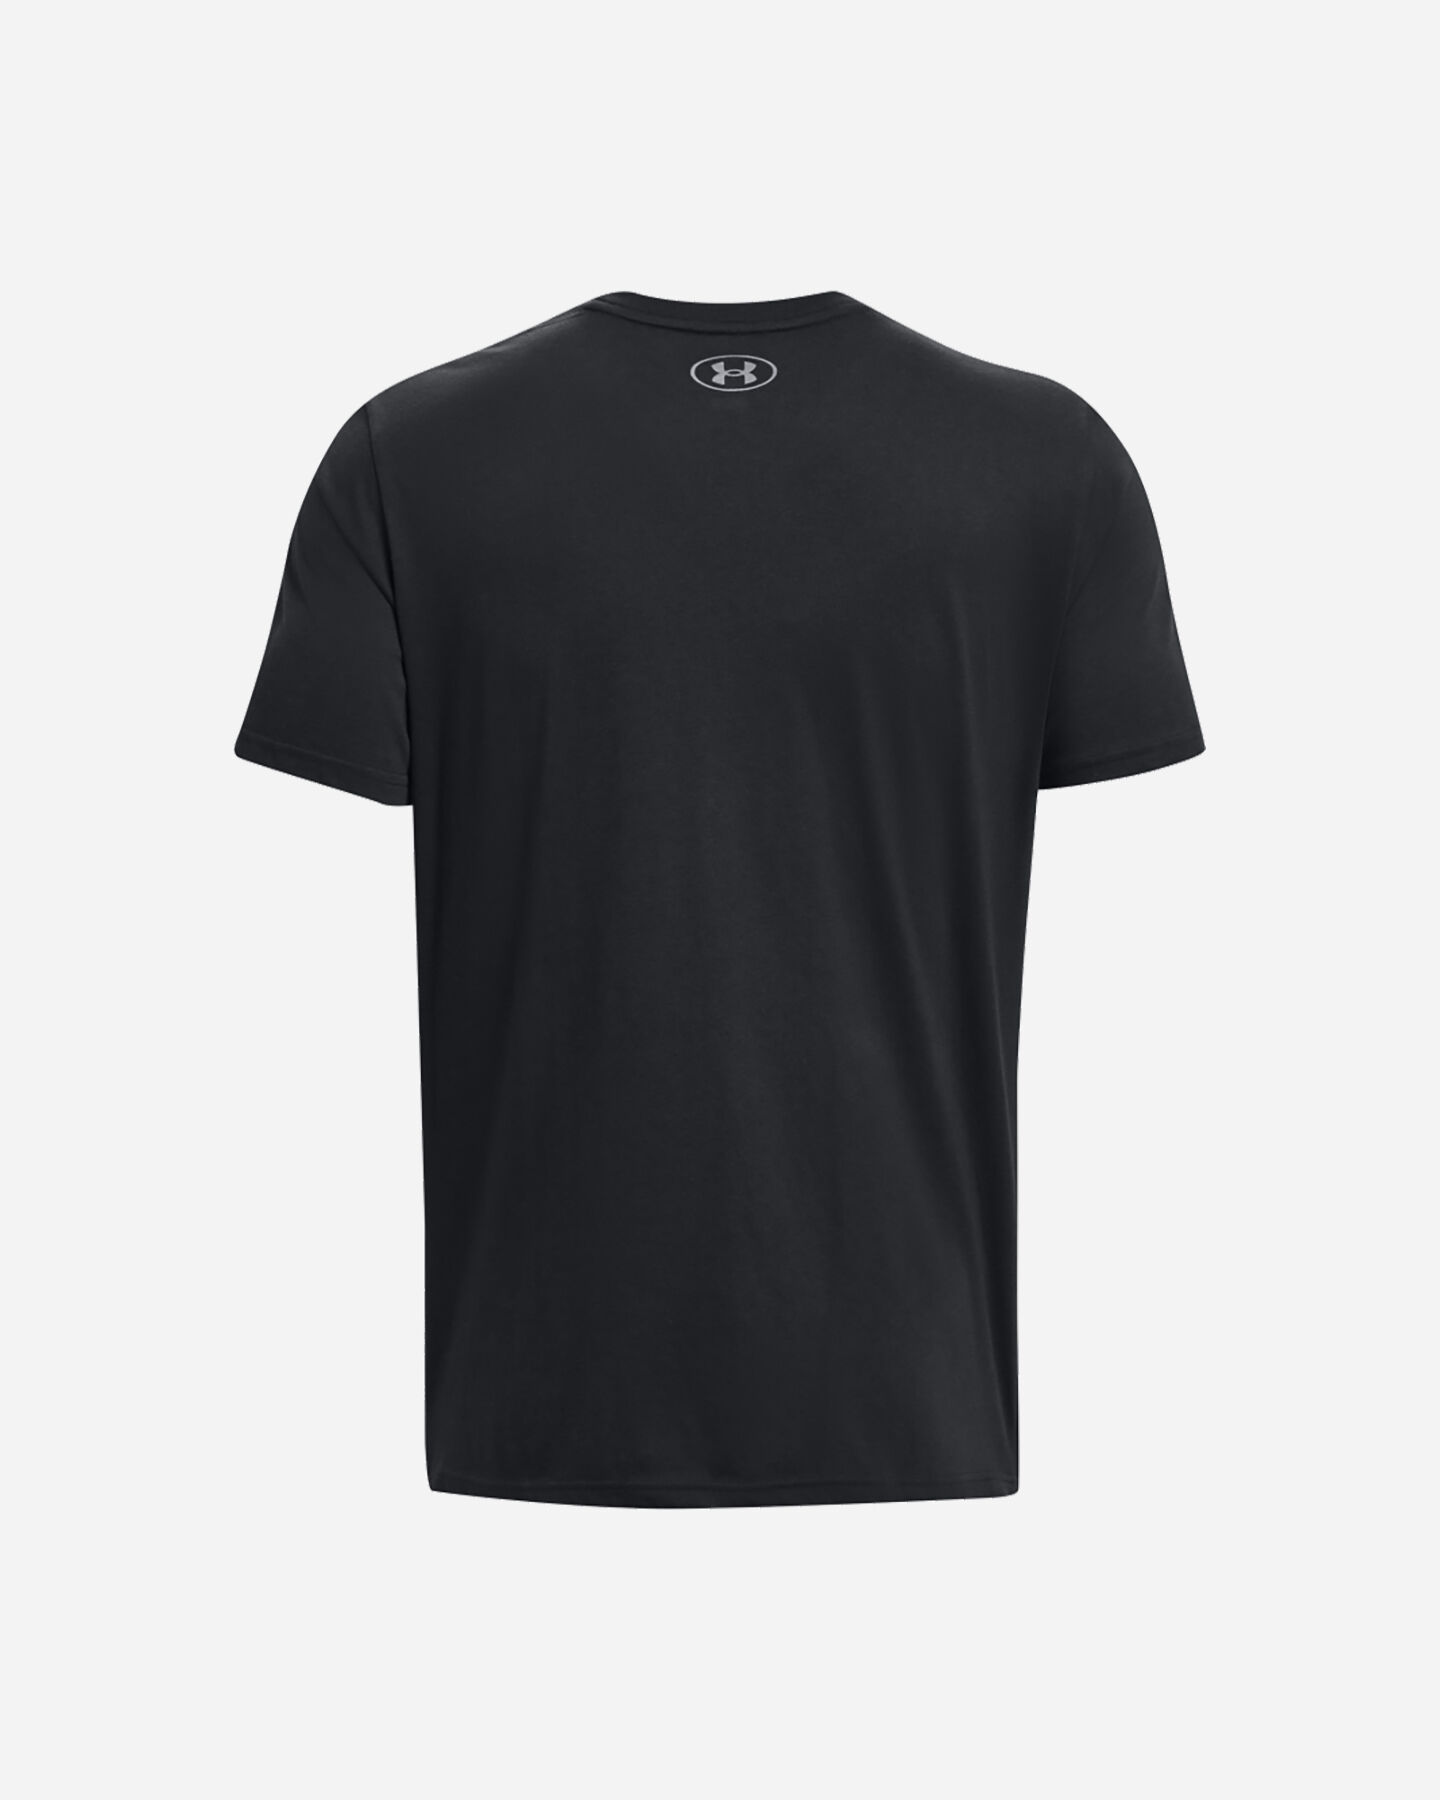  T-Shirt UNDER ARMOUR THE ROCK PJT ROCK BRAHMA BULL M S5579855|0001|LG scatto 1